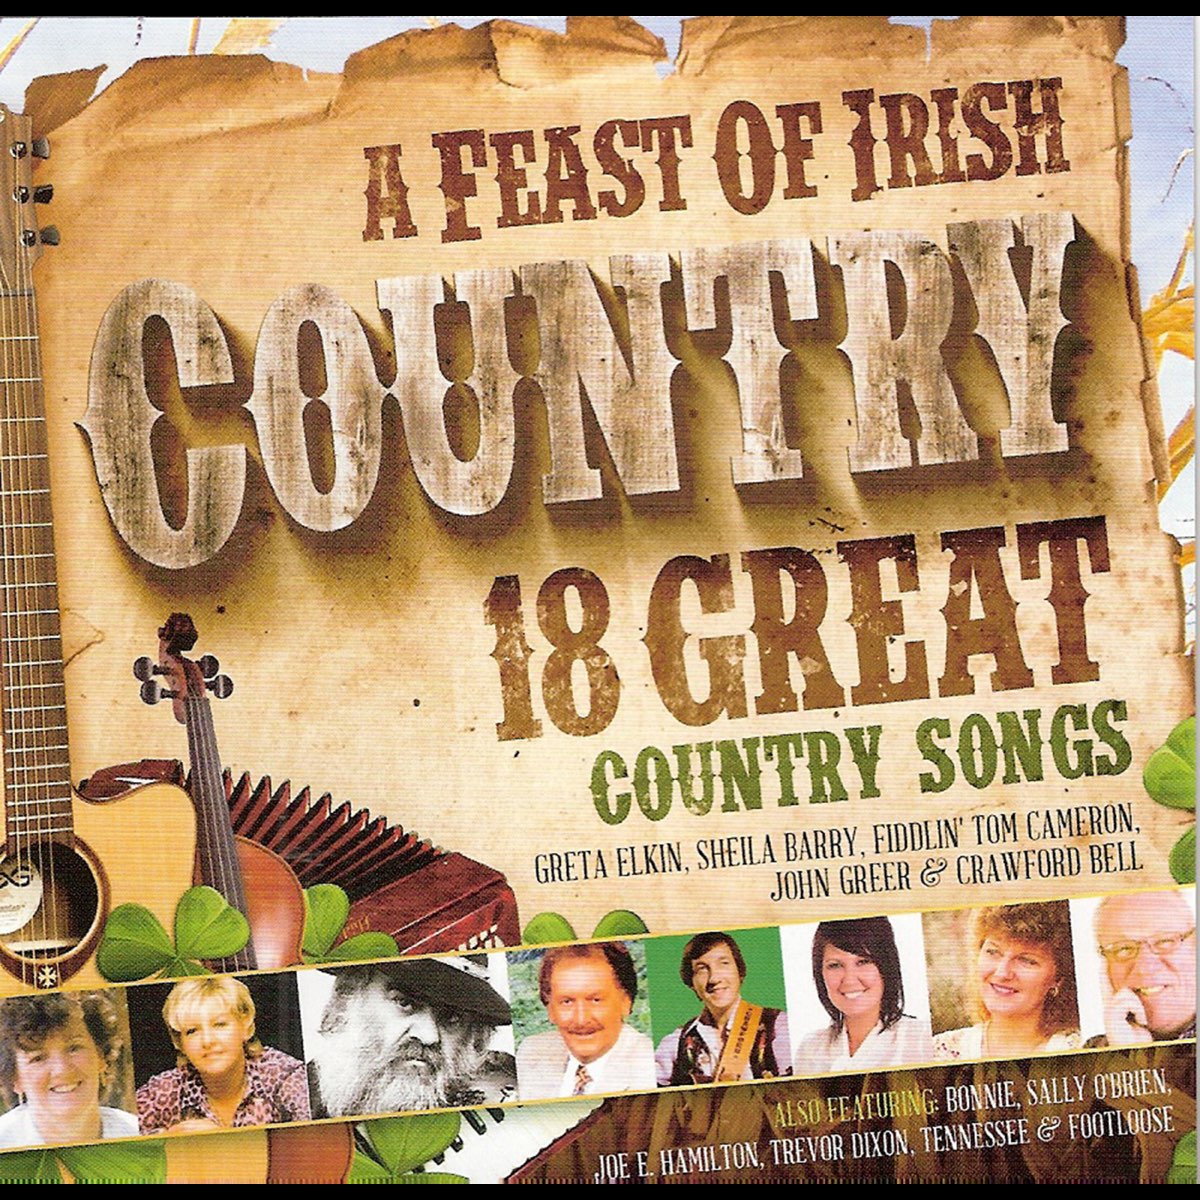 irish country singers tour dates